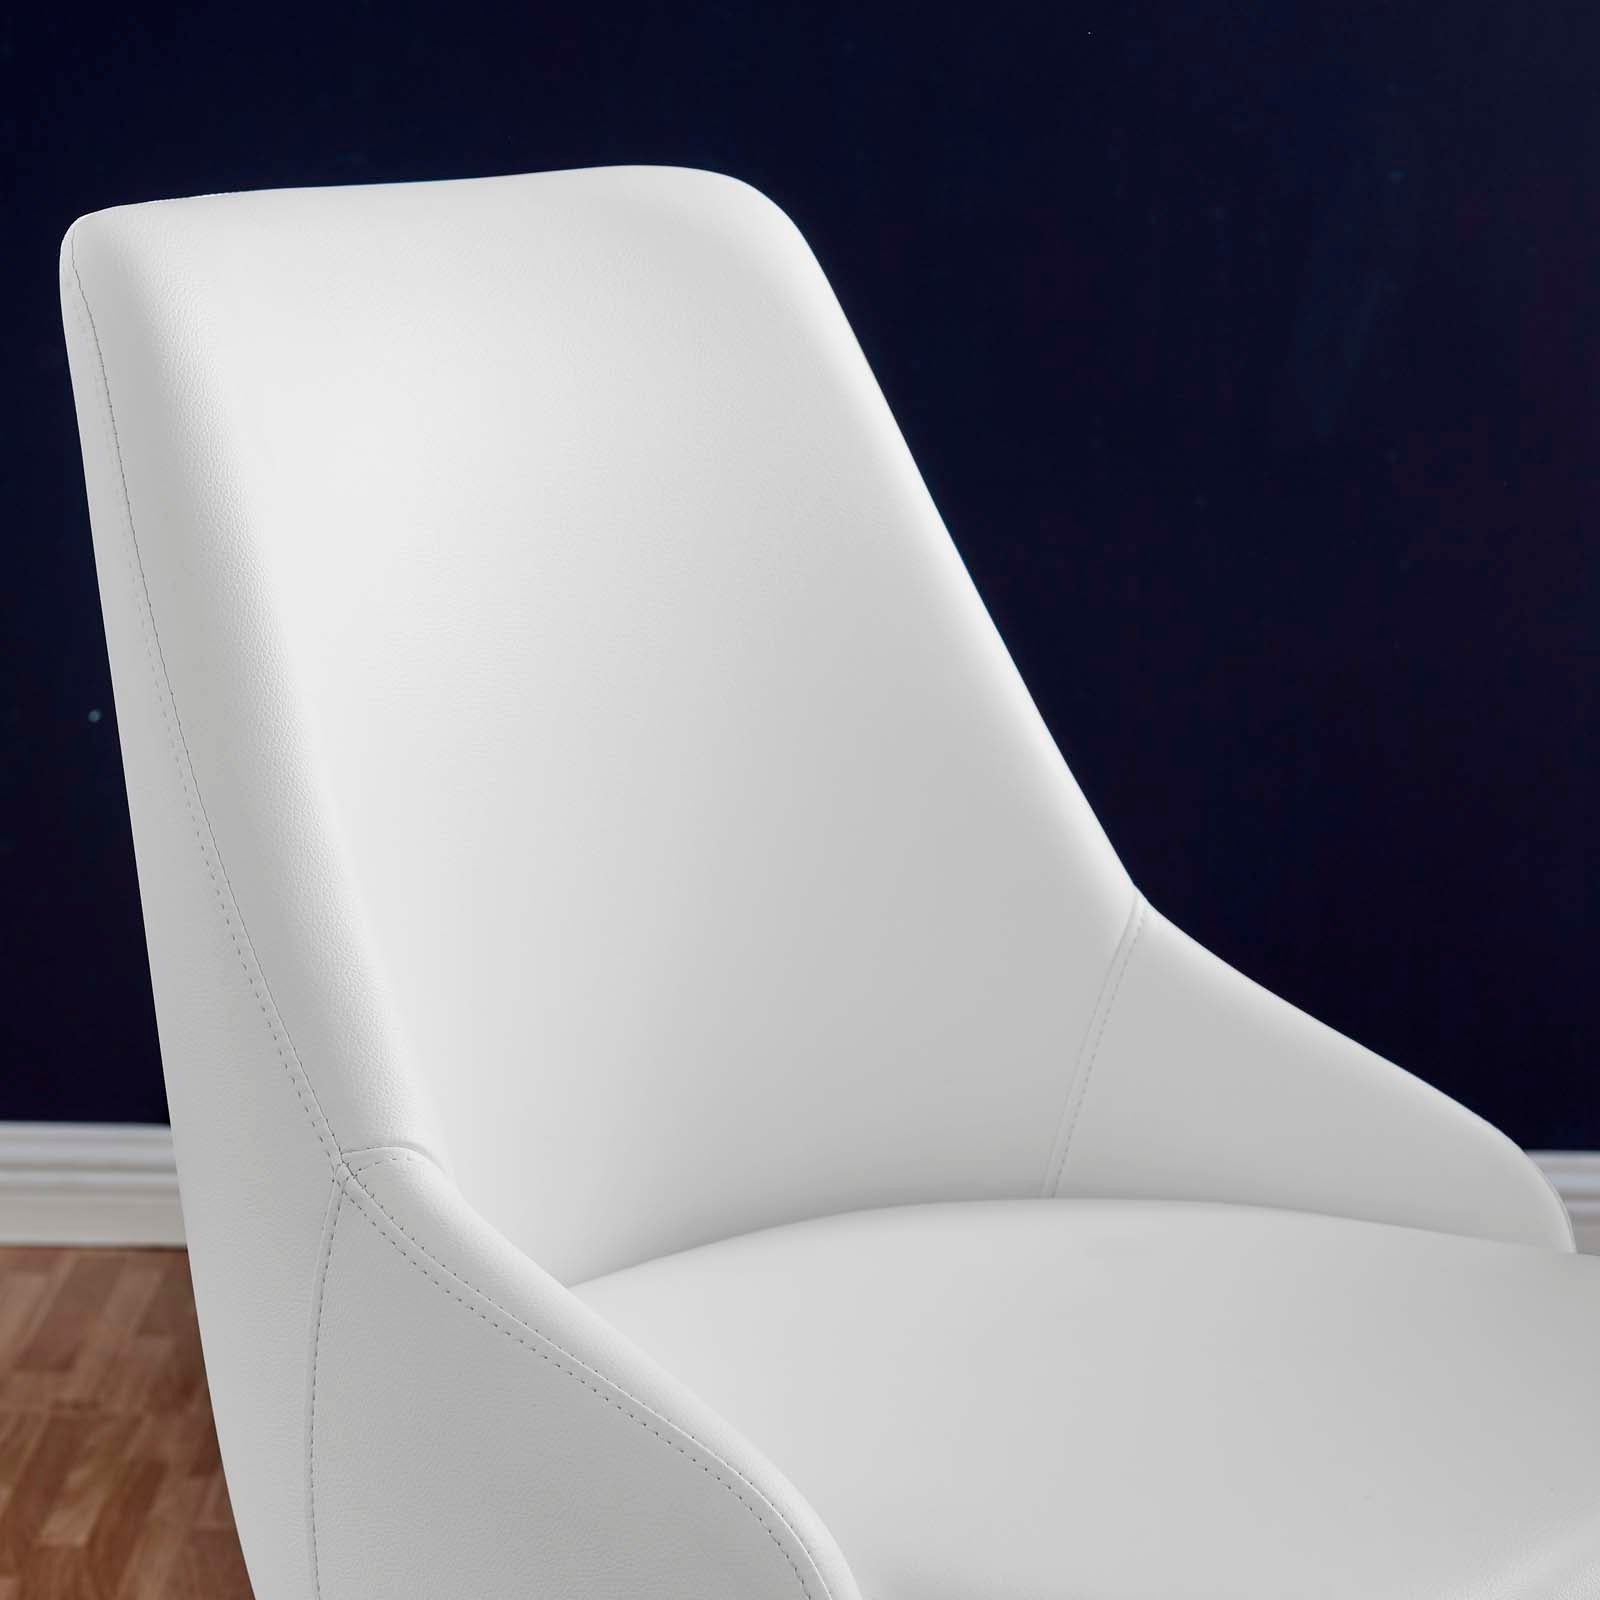 Modway Task Chairs - Designate Swivel Vegan Leather Office Chair Black White